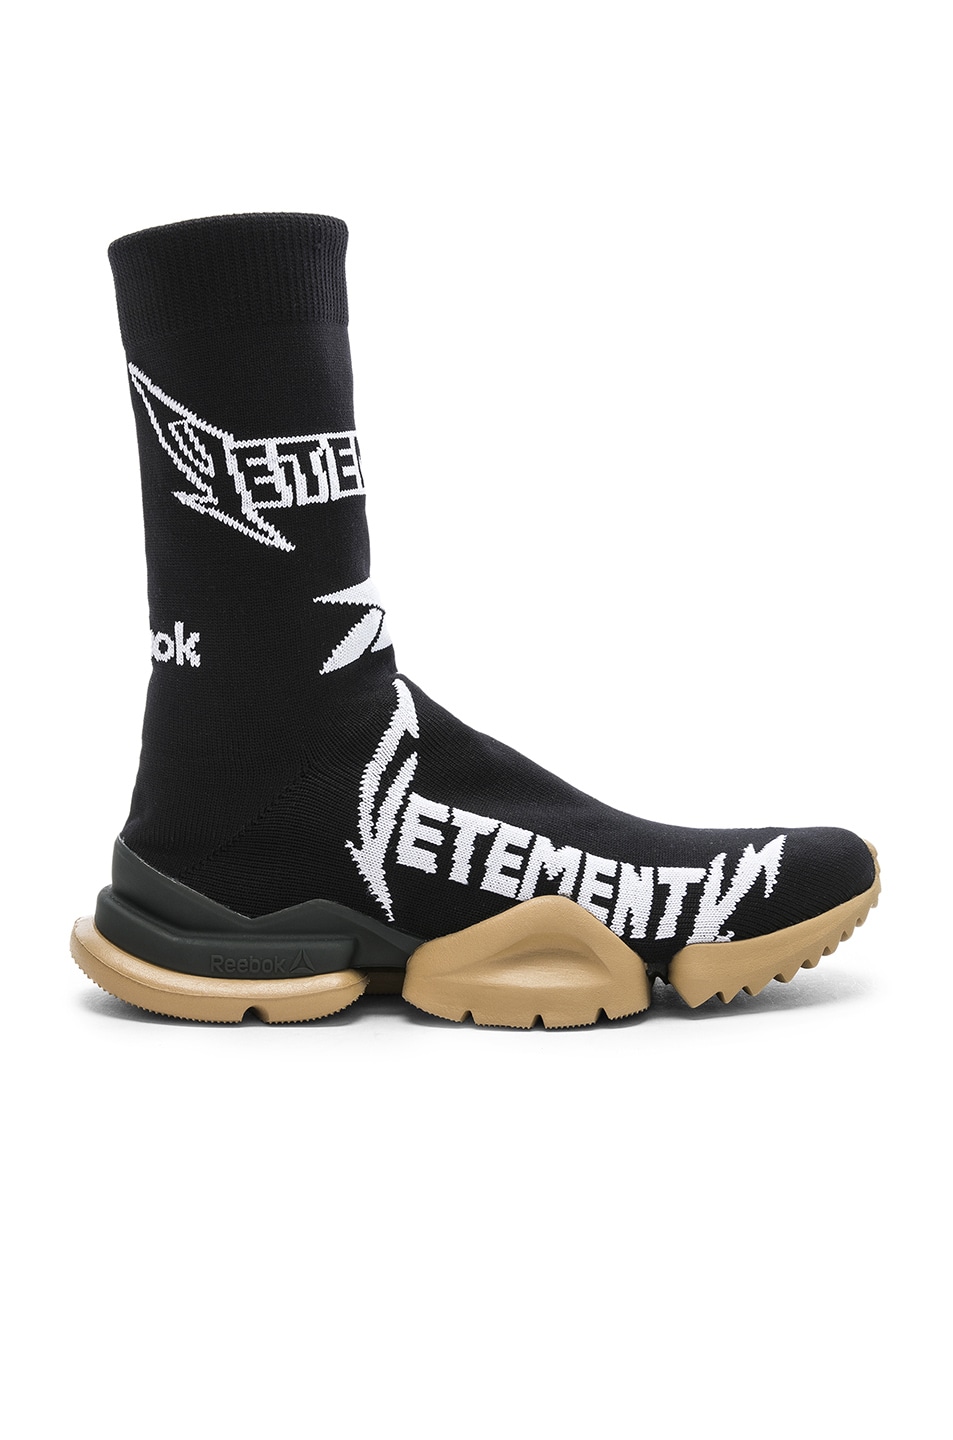 Image 1 of VETEMENTS x Reebok Metal Sock Boots in Black & White